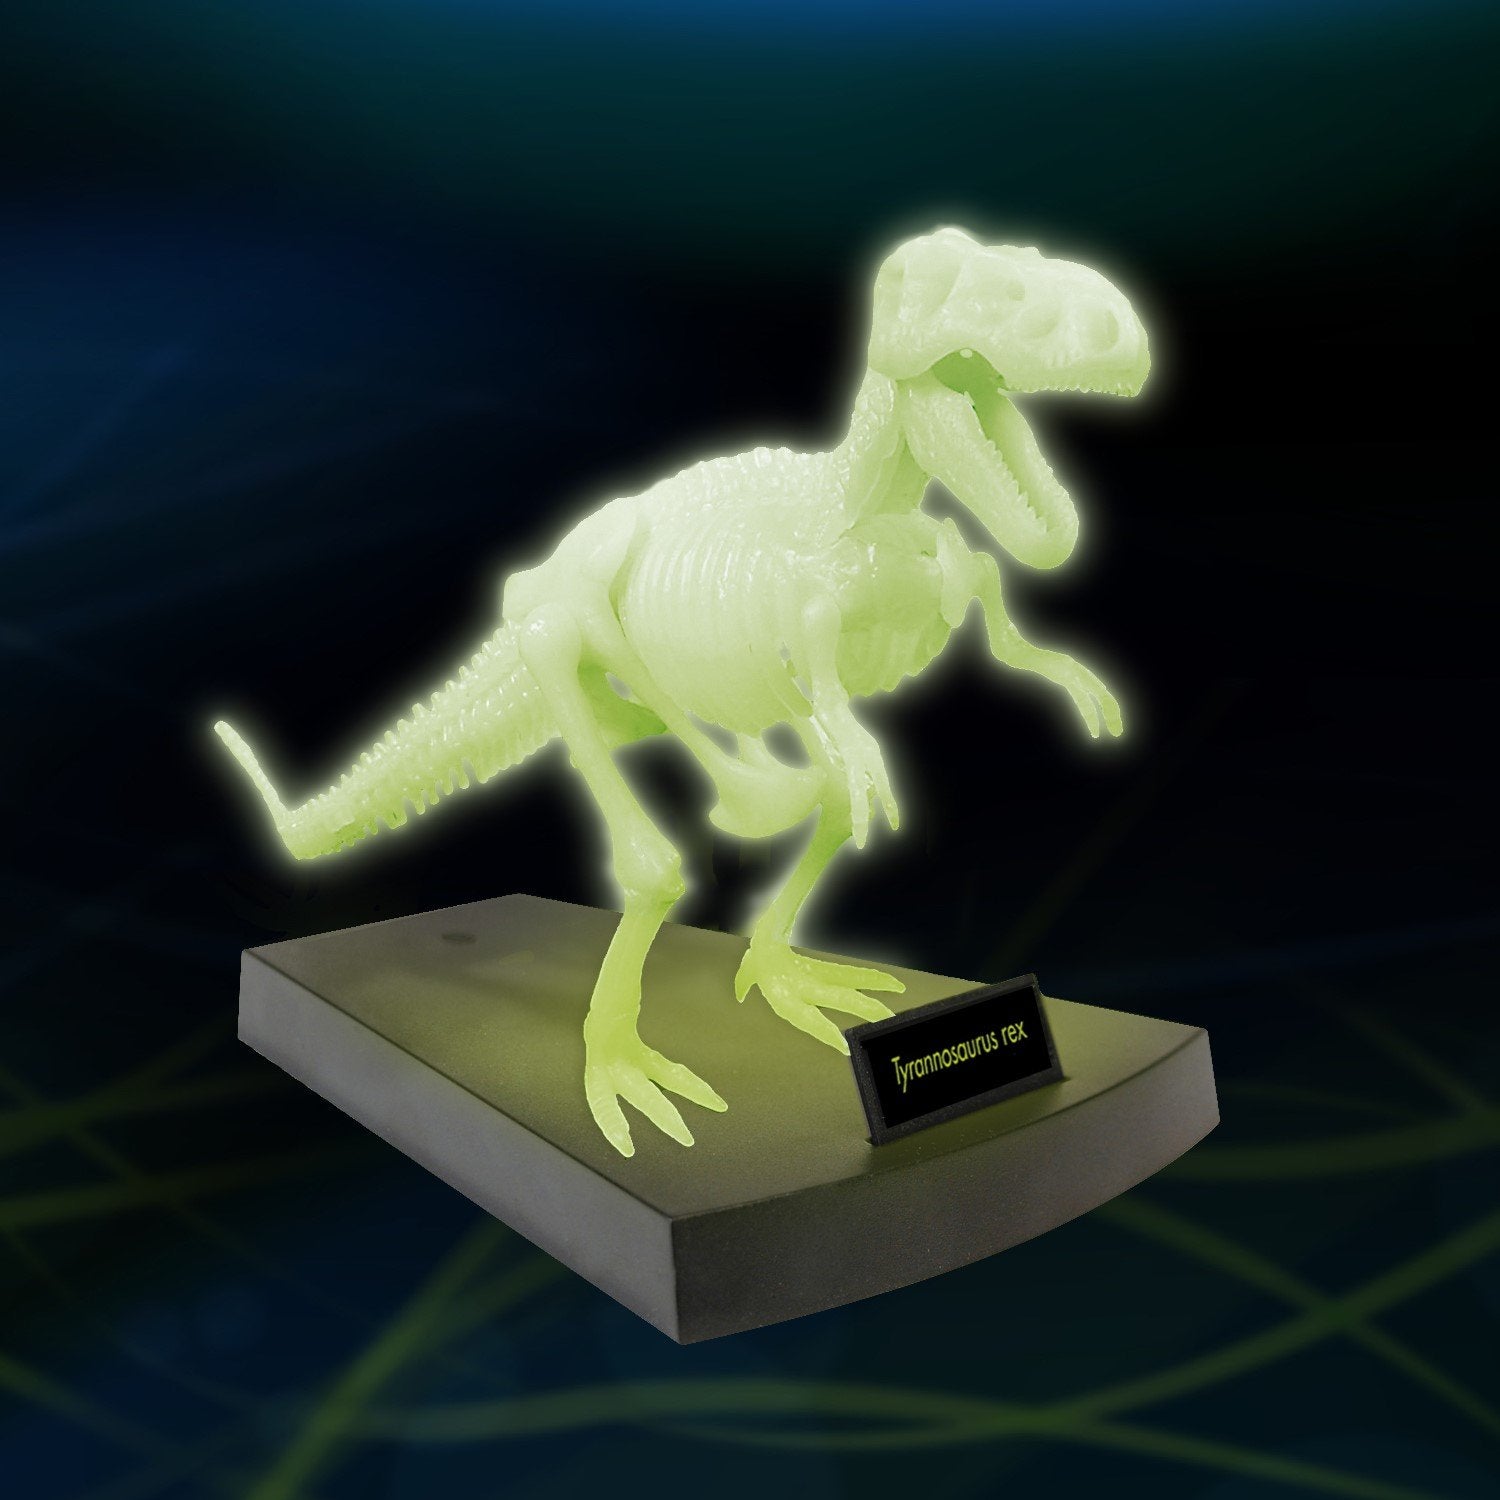 Dr. Steve Hunters Jurassic Night Glow-In-The-Dark Tyrannosaurus Rex